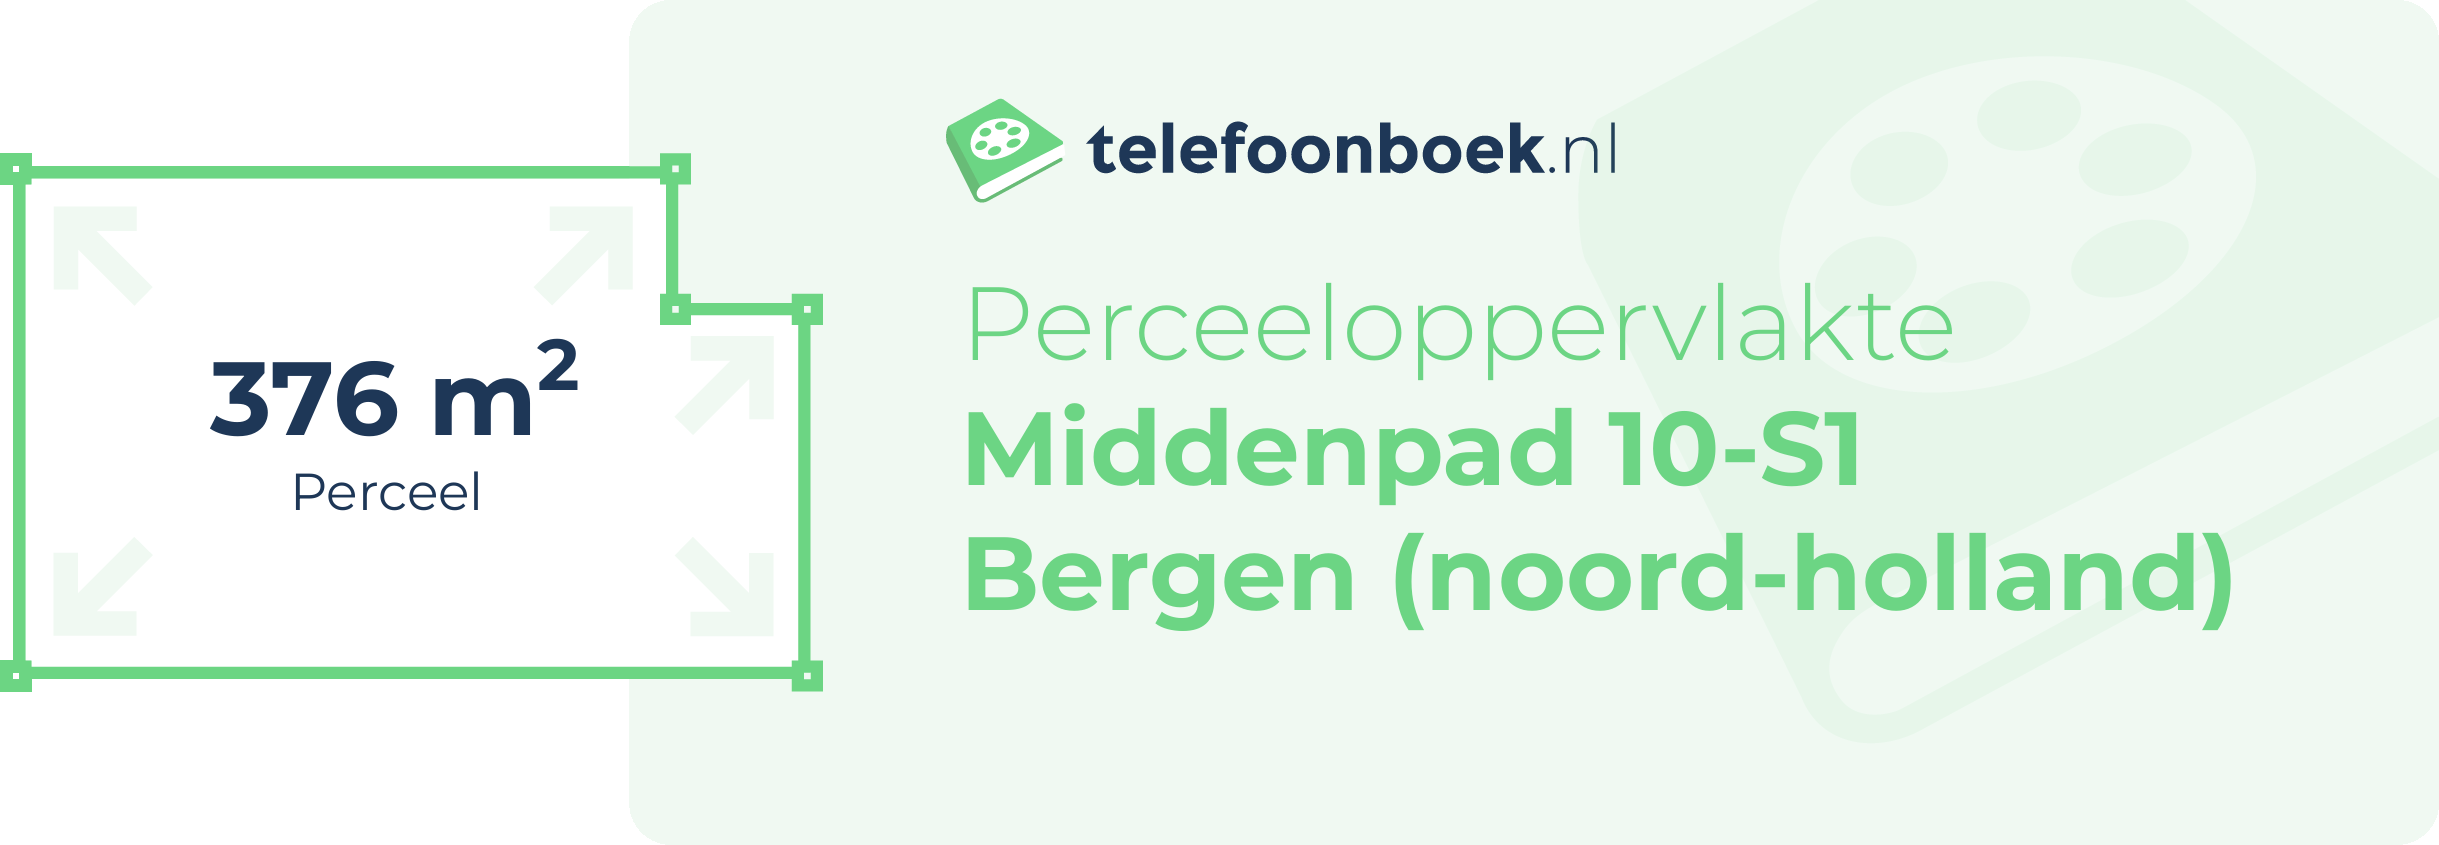 Perceeloppervlakte Middenpad 10-S1 Bergen (Noord-Holland)